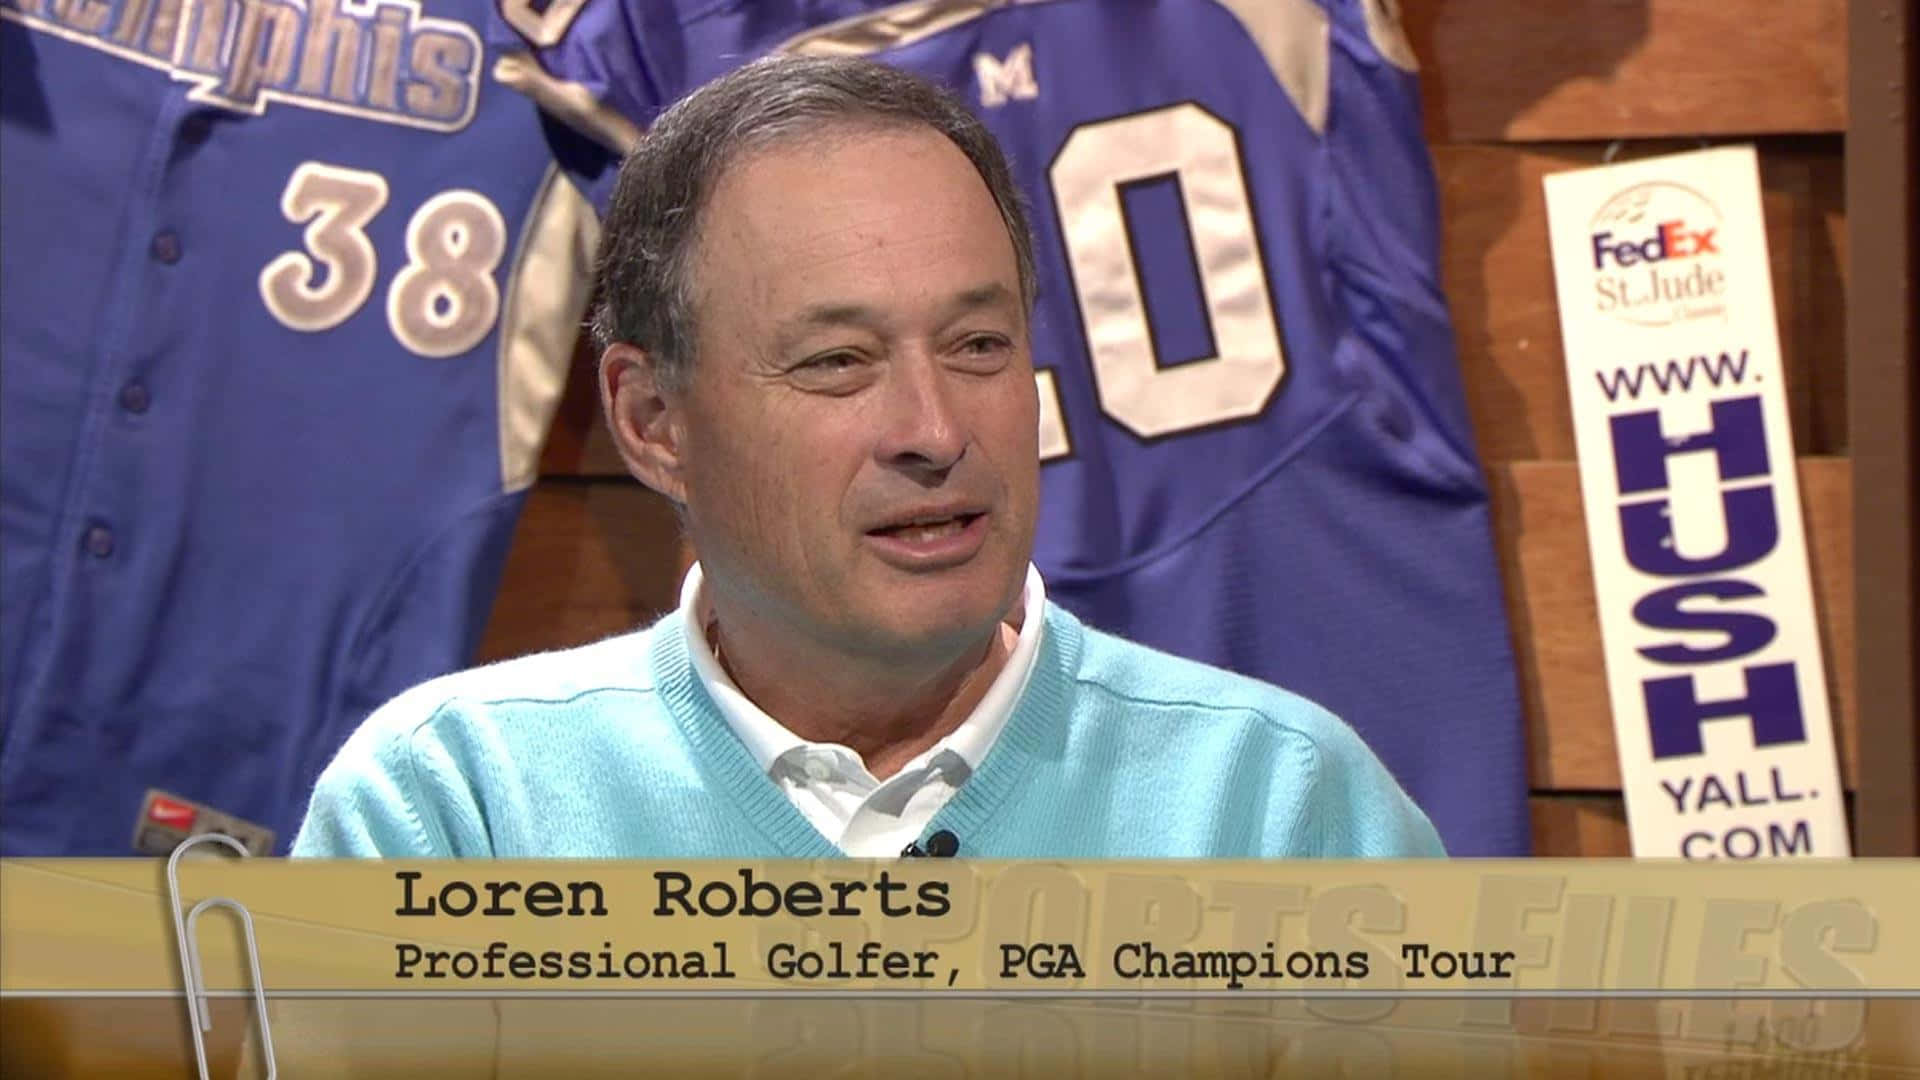 Loren Roberts Professional Golfer Wallpaper